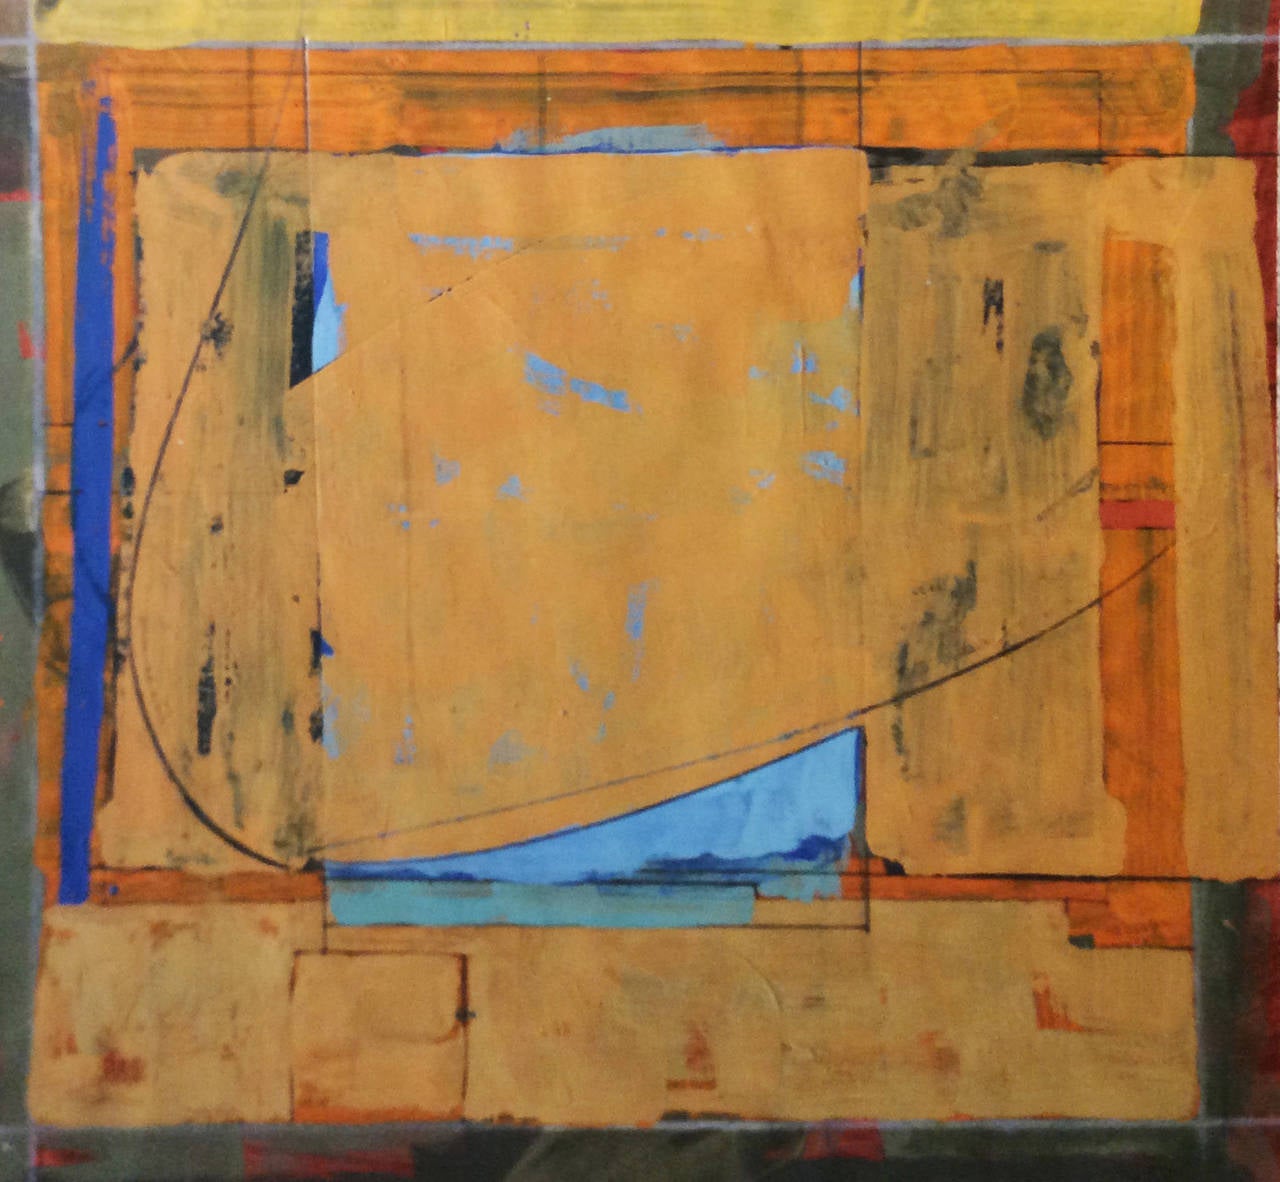 Oct. 15 (IV) (Abstract Mixed Media in Orange and Blue) - Mixed Media Art by James O'Shea